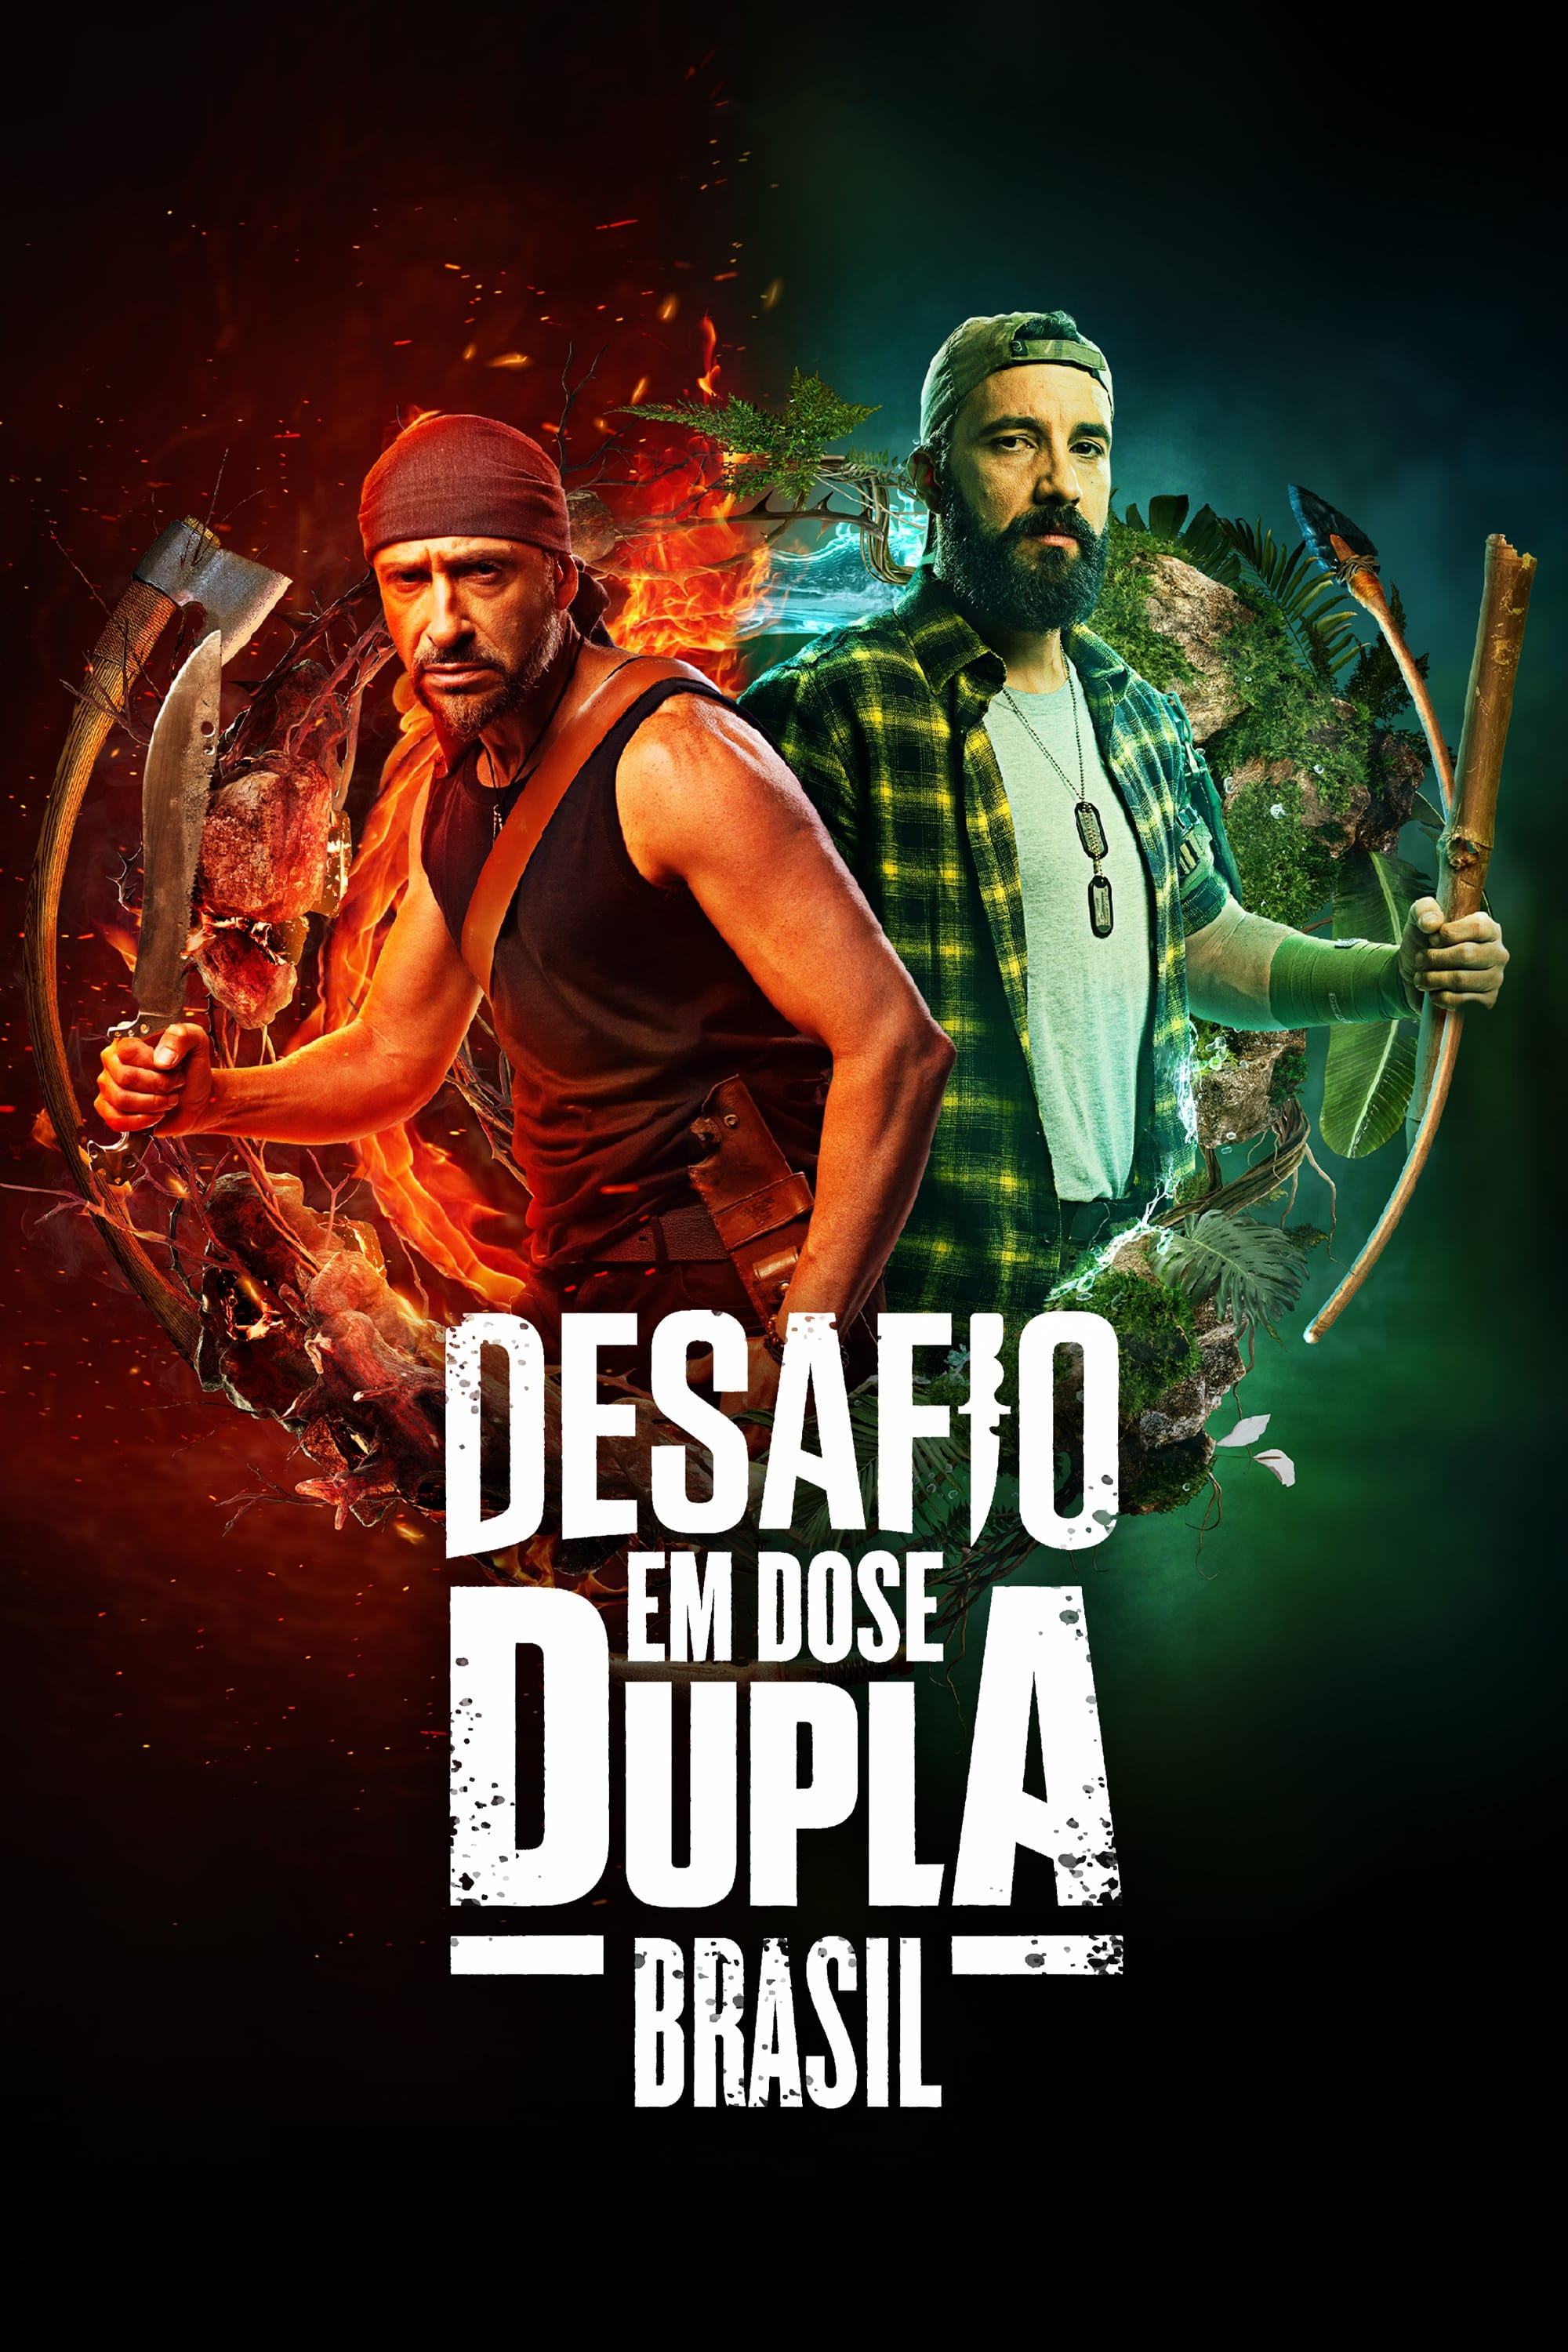 TV ratings for Dual Survival Brazil (Desafio Em Dose Dupla Brasil) in Chile. Discovery+ TV series